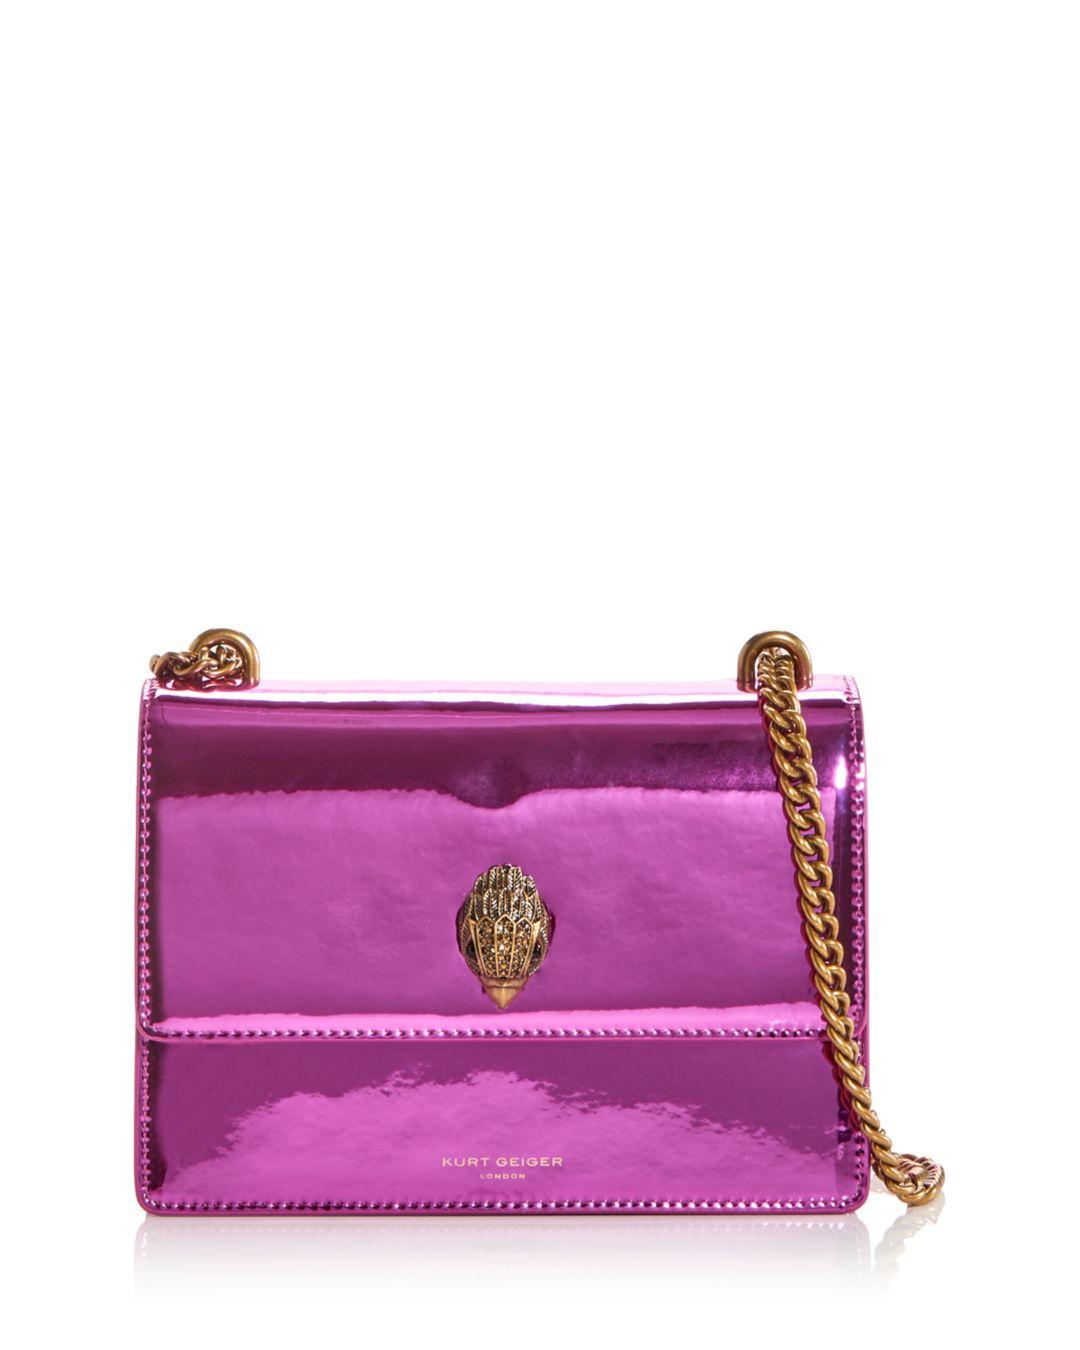 Kurt Geiger Shoreditch Small Leather Crossbody Bag in Purple | Lyst